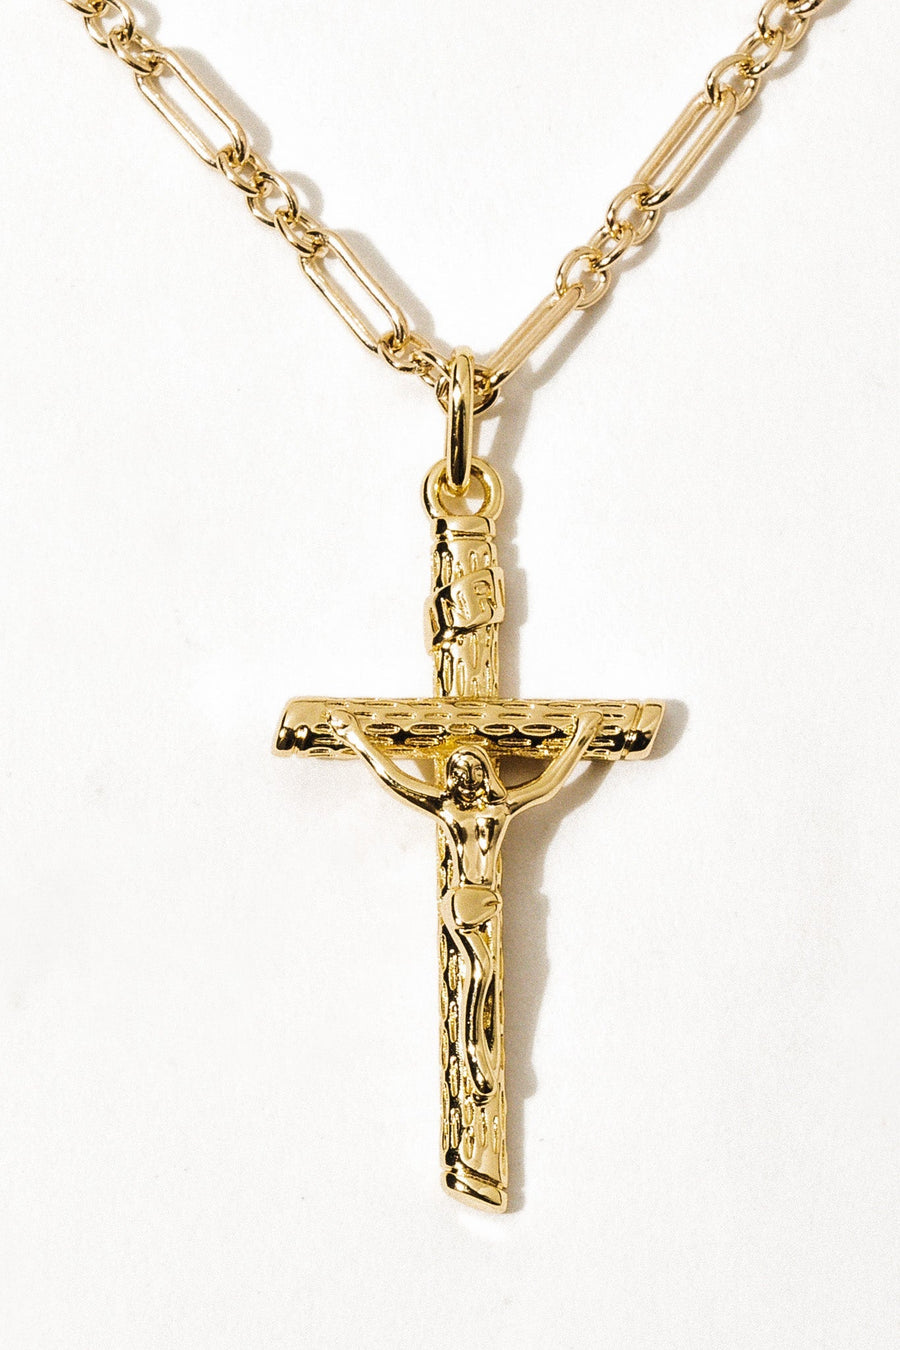 CGM Jewelry Gold / 15 Inches The Pietà Crucifix Necklace